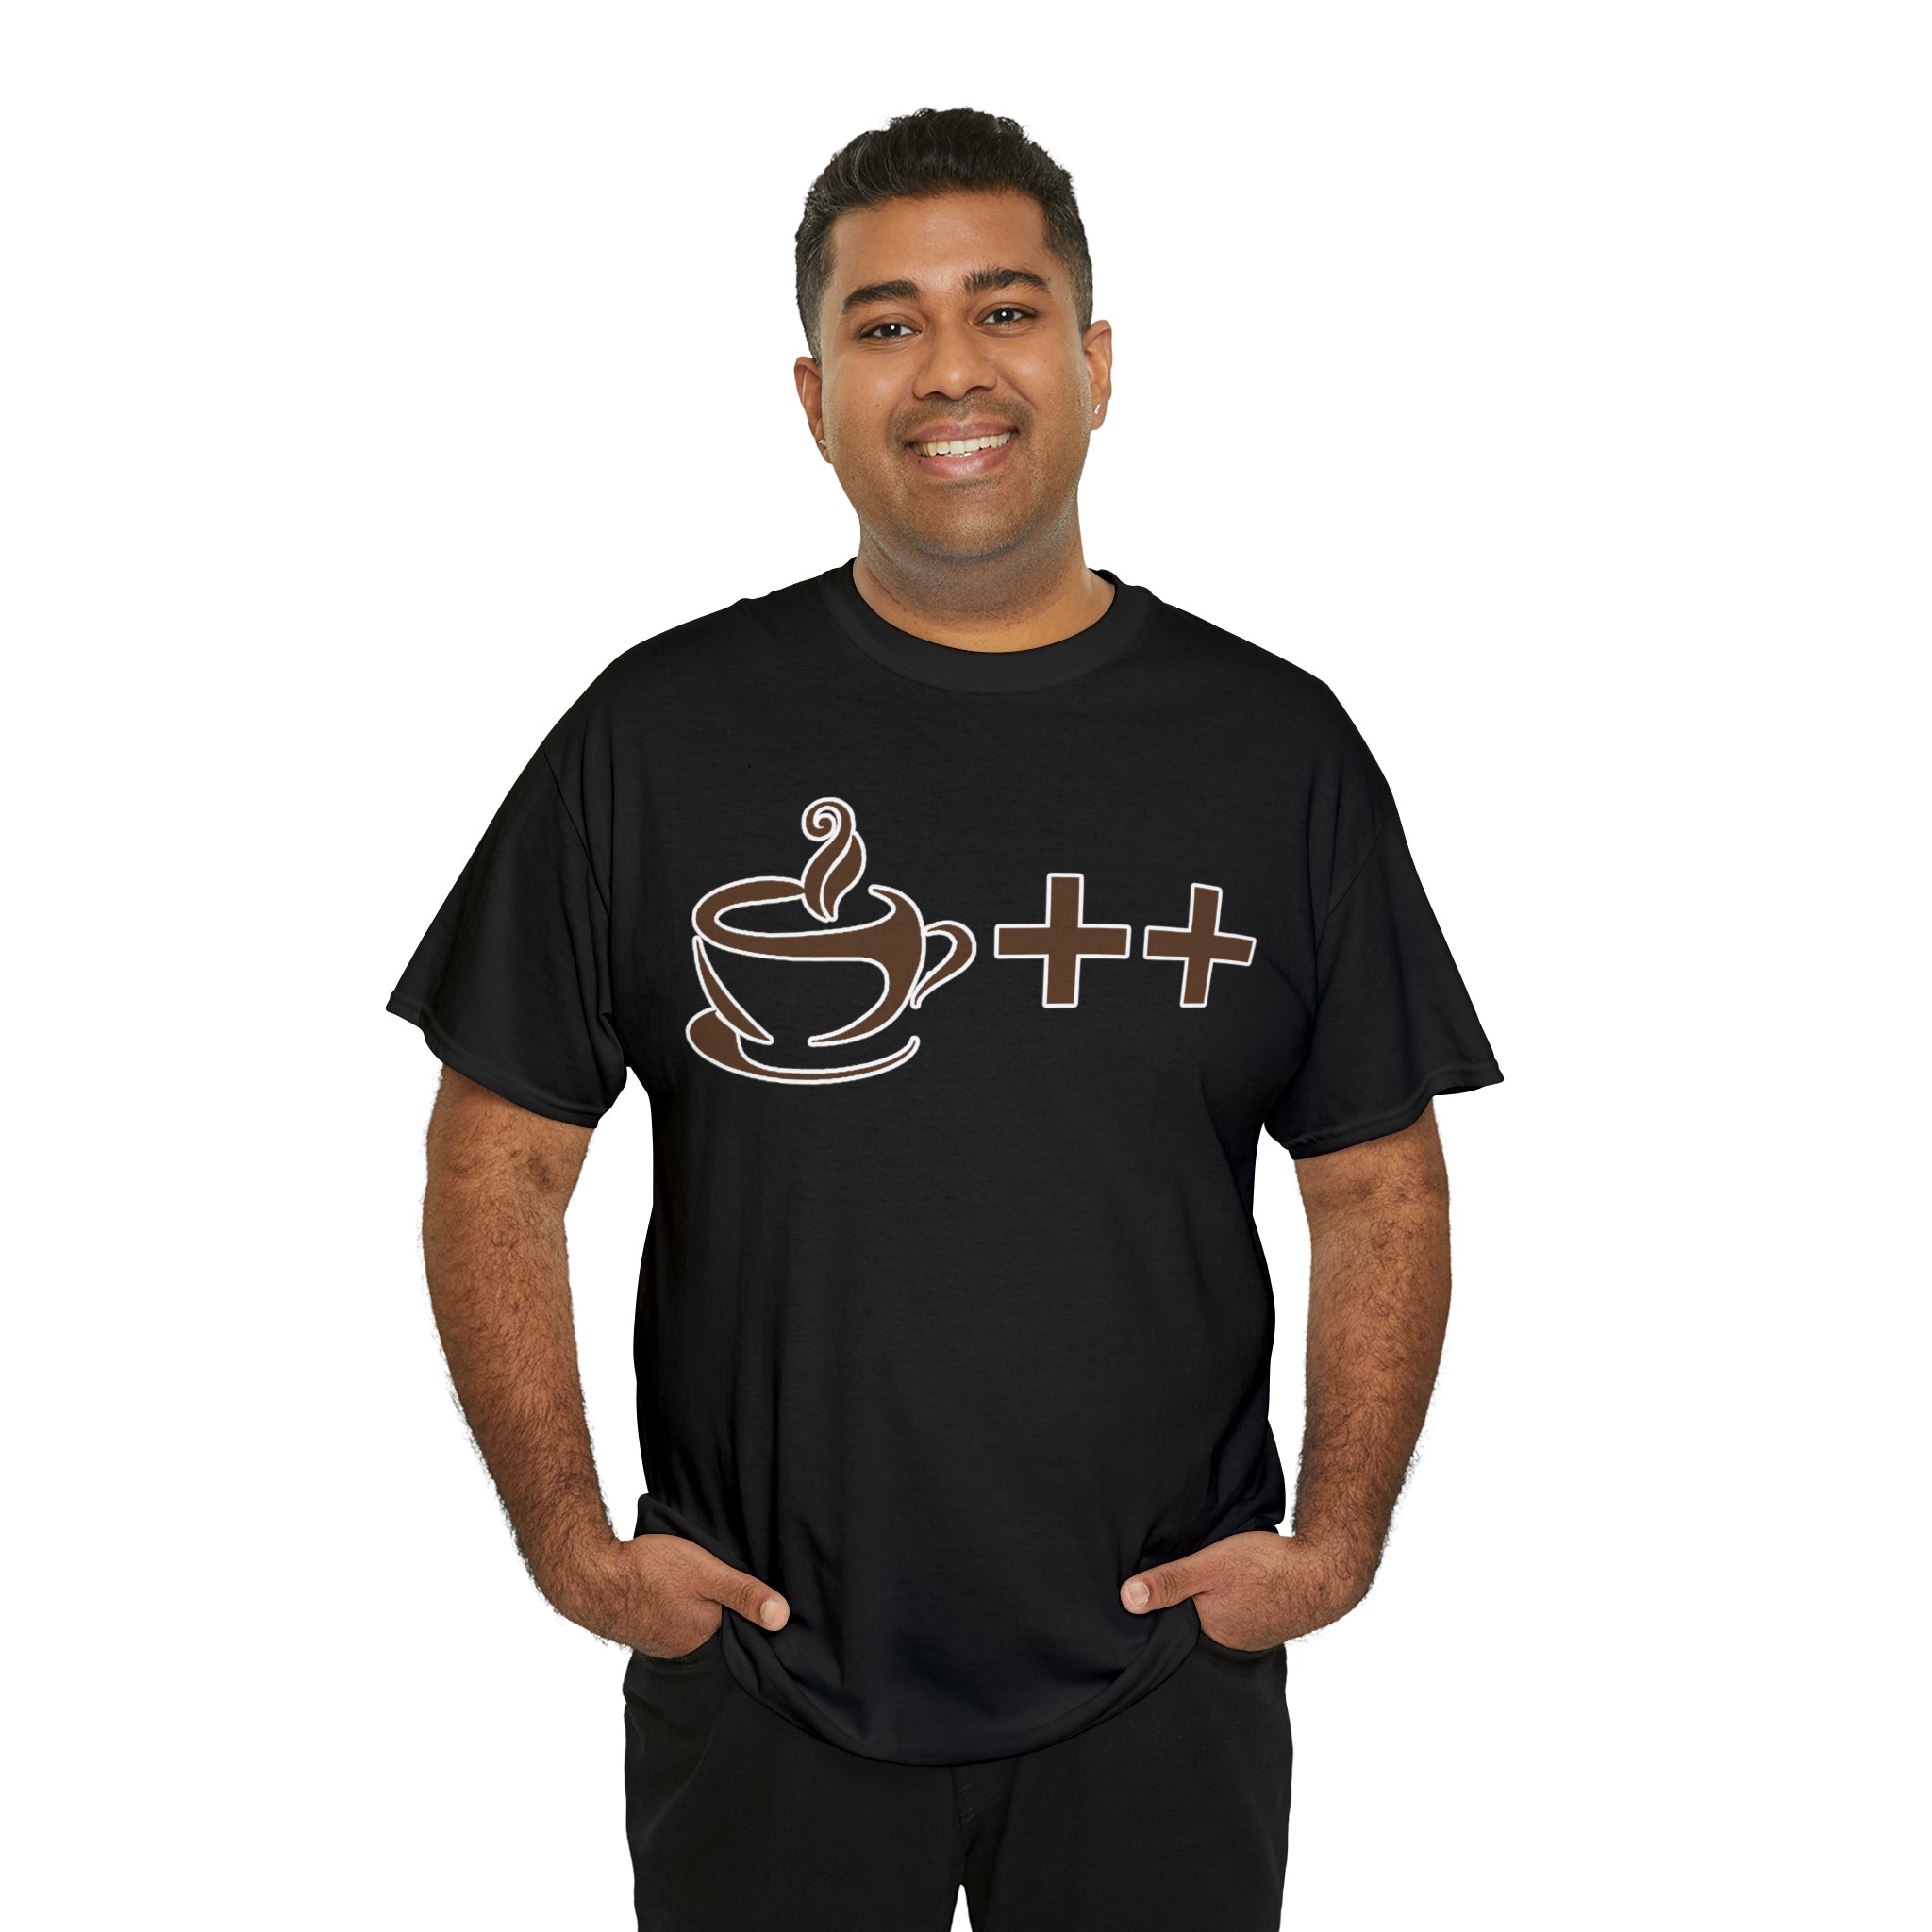 Chai ++ T-Shirt Design by C&C